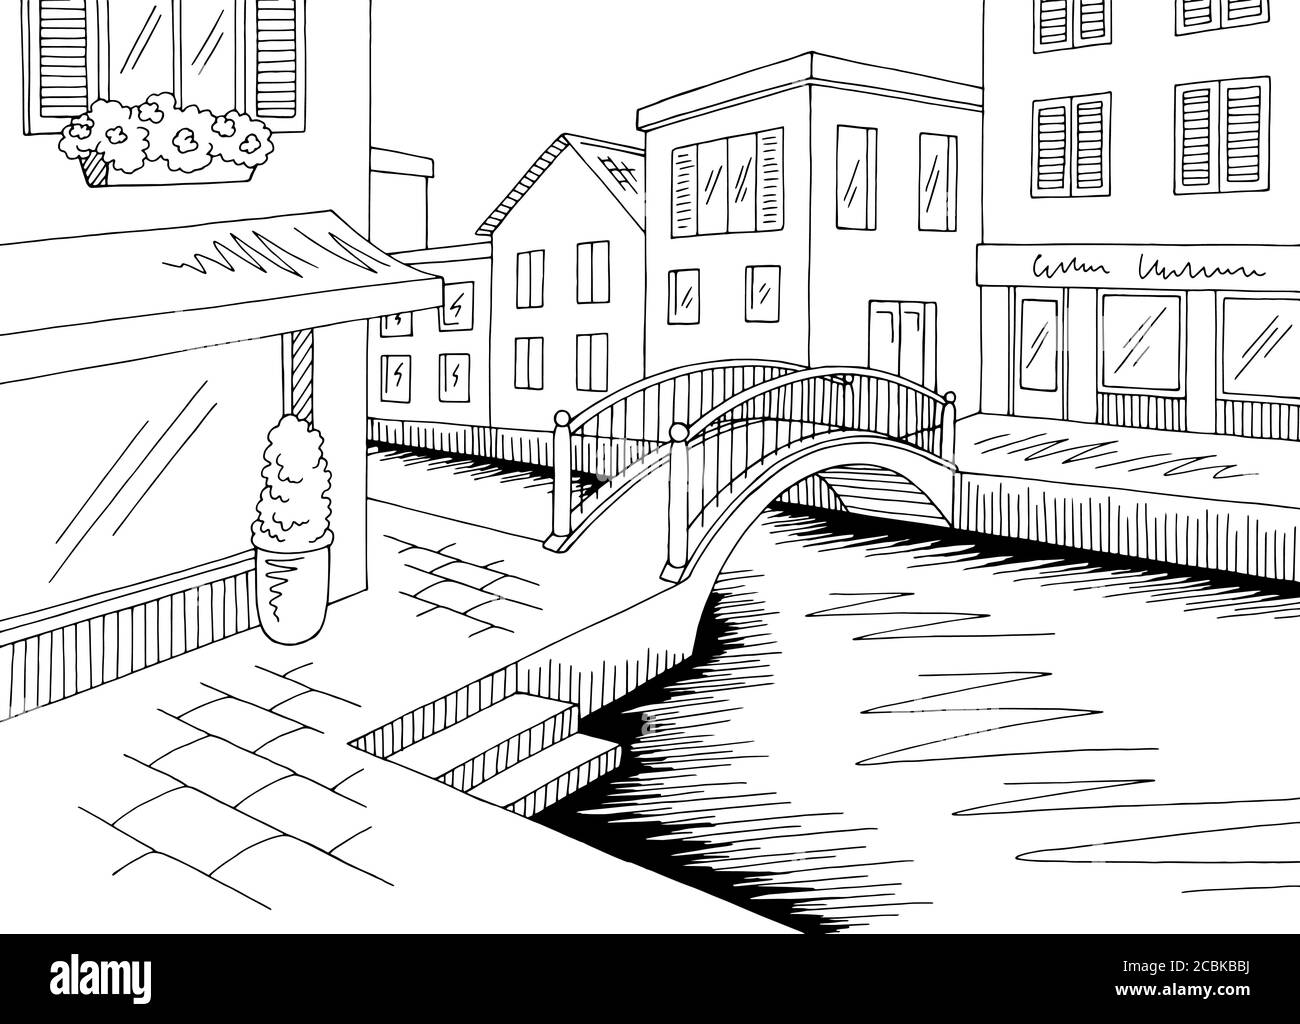 Alte Straße Fluss Grafik schwarz weiß Stadt Landschaft Skizze Illustration vektor Stock Vektor